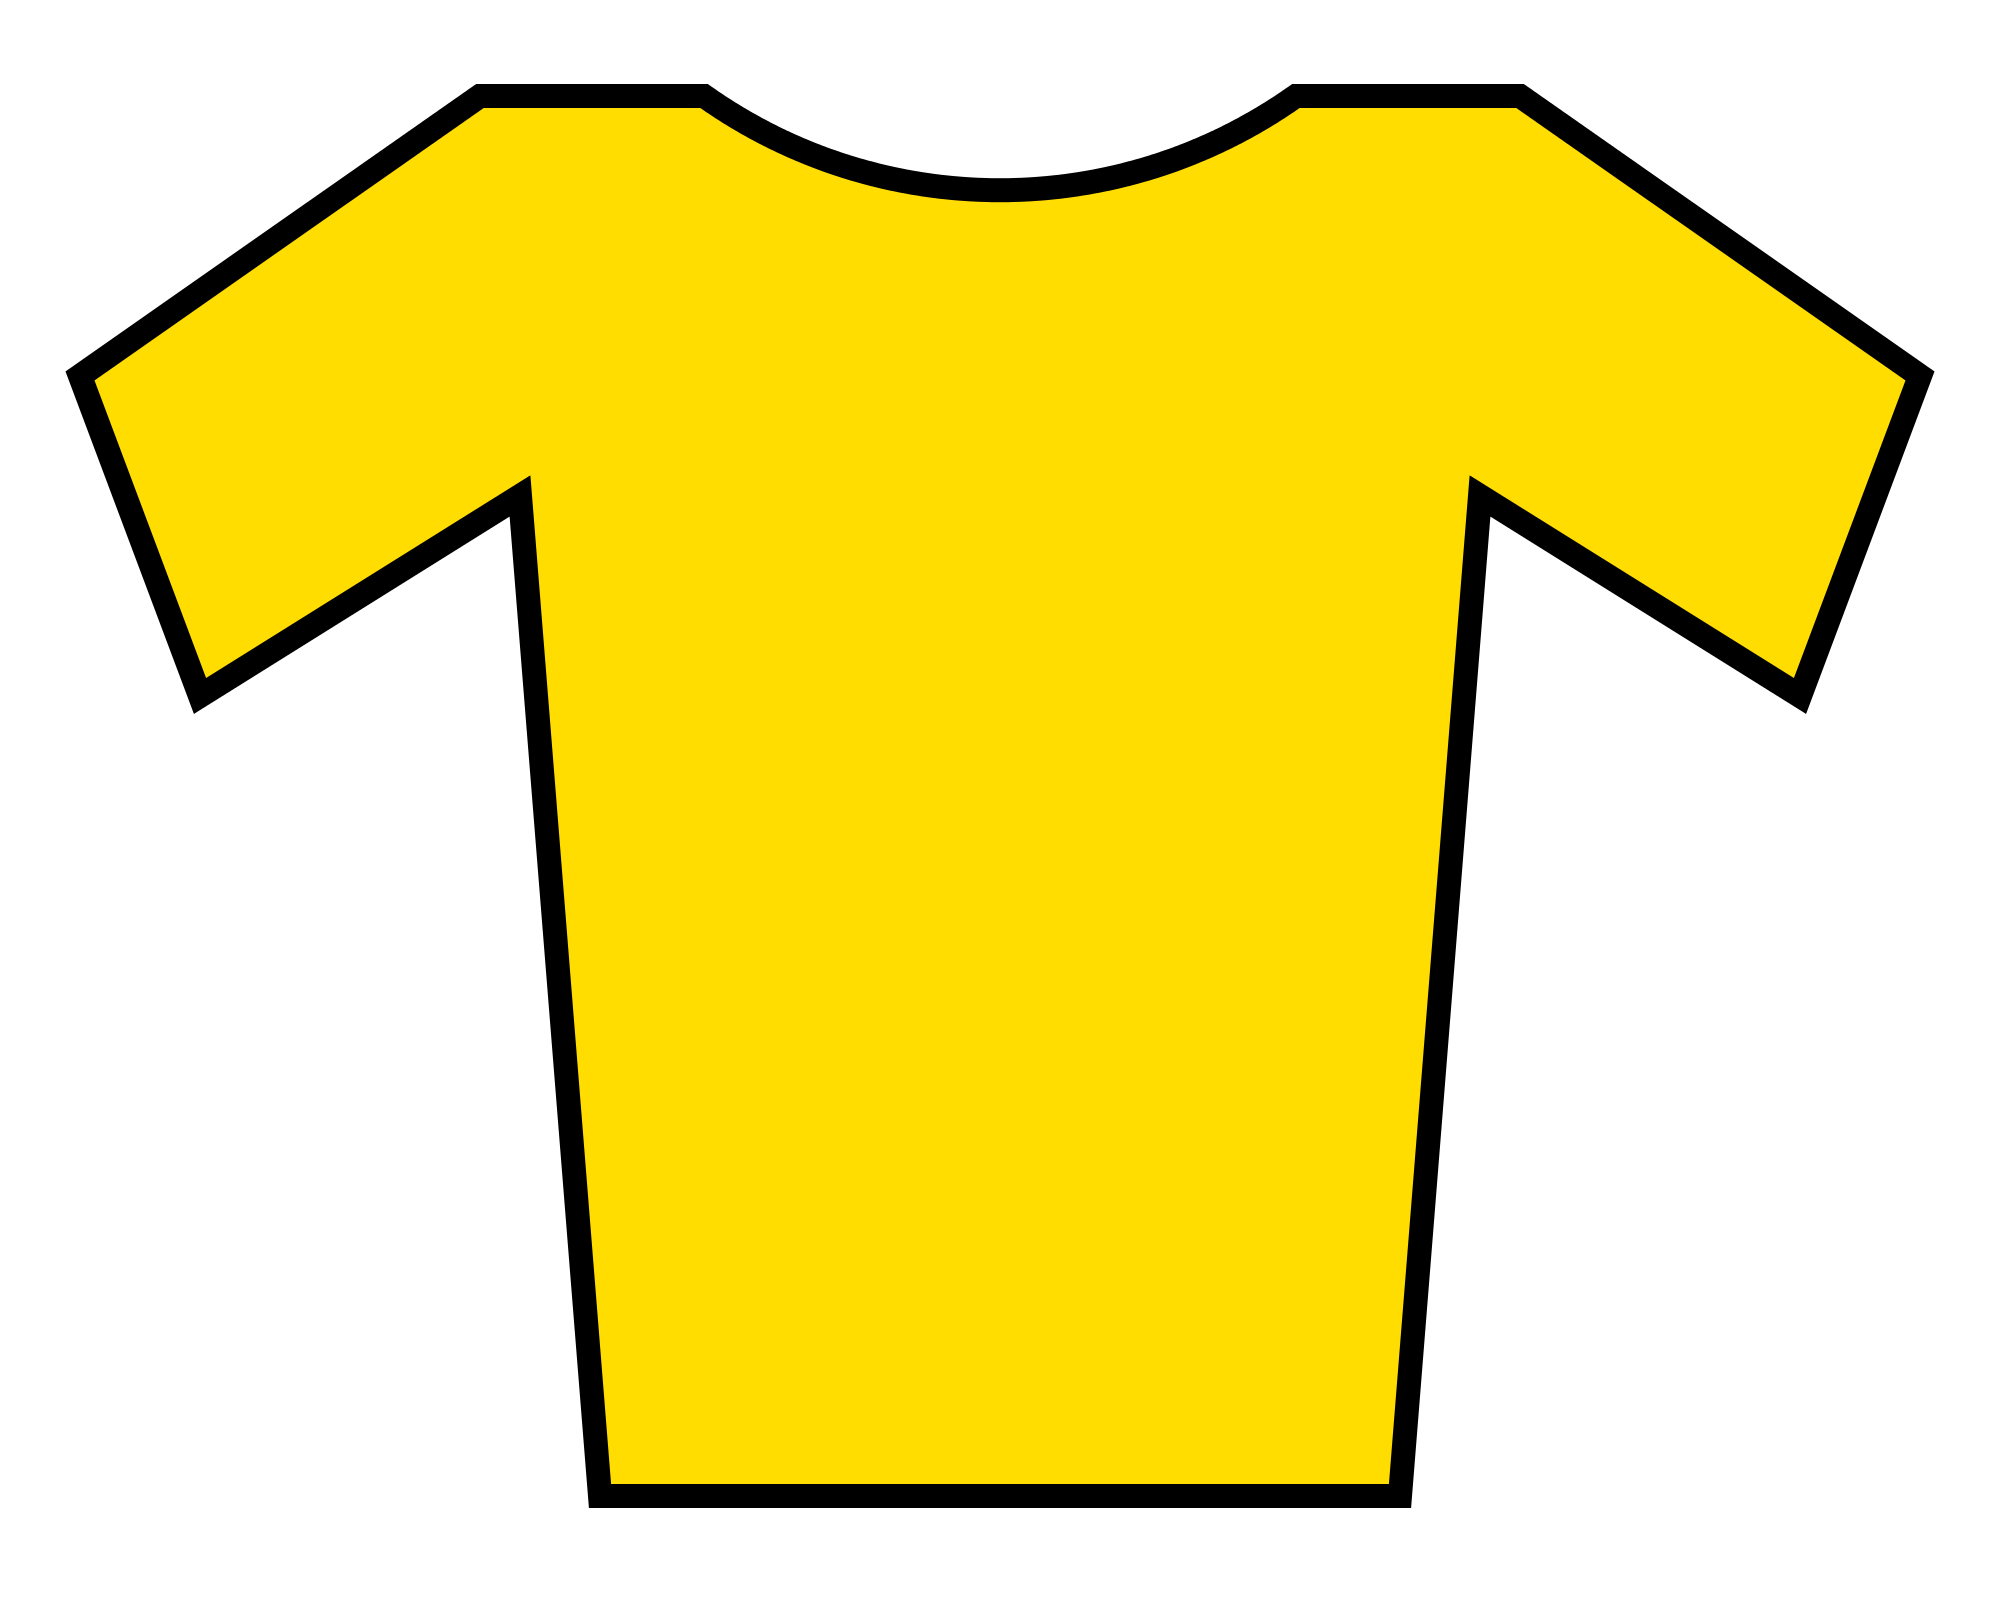 File:Jersey yellow.svg